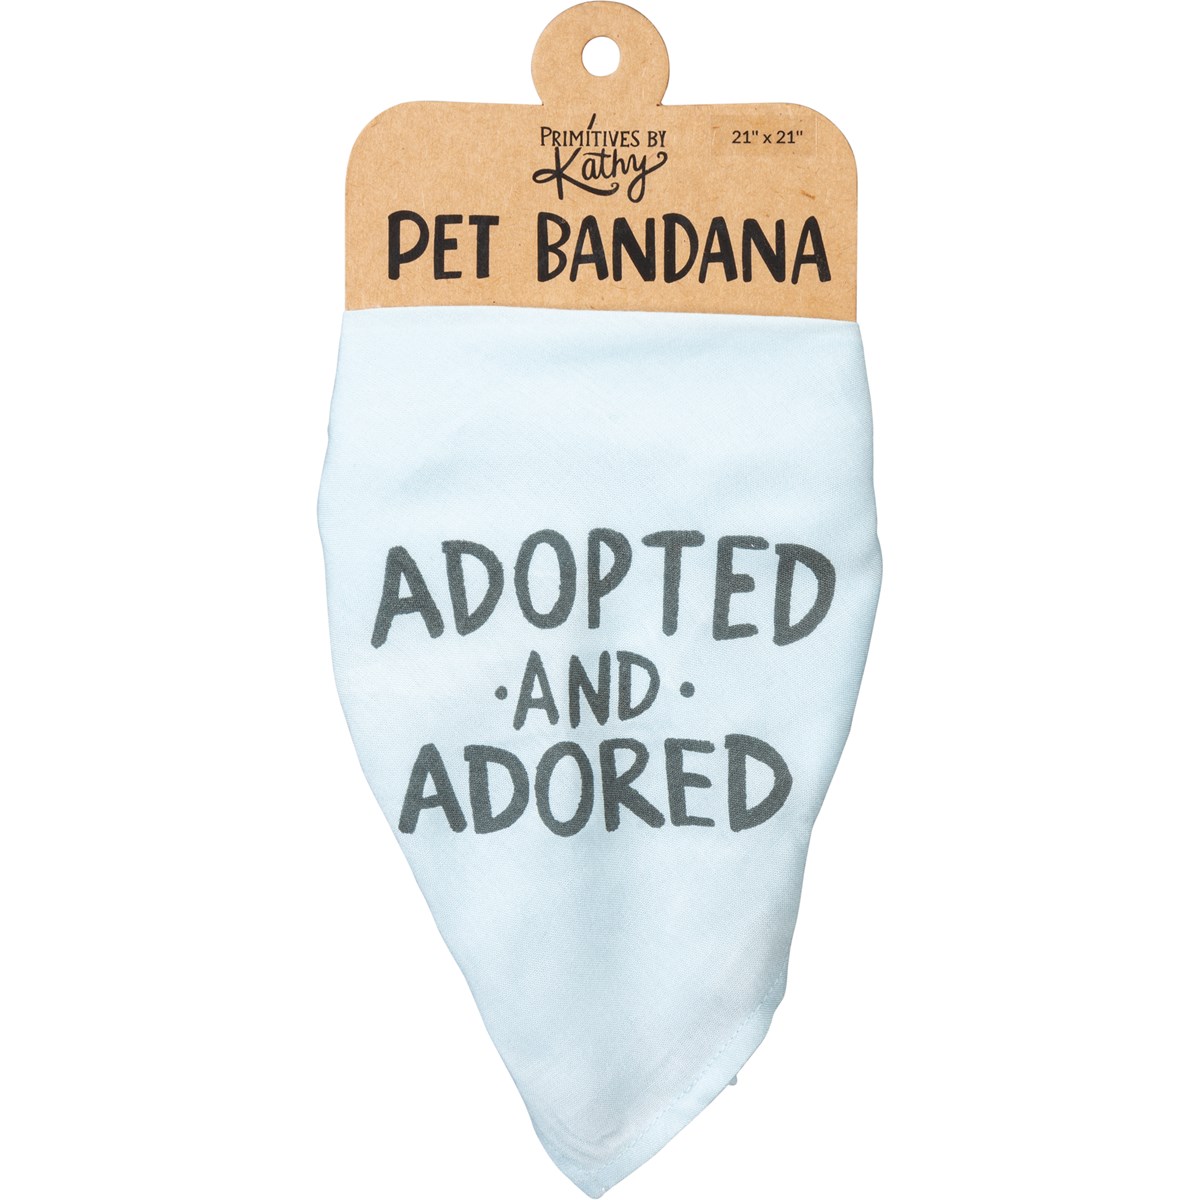 Adopted And Adored Large Pet Bandana - Rayon